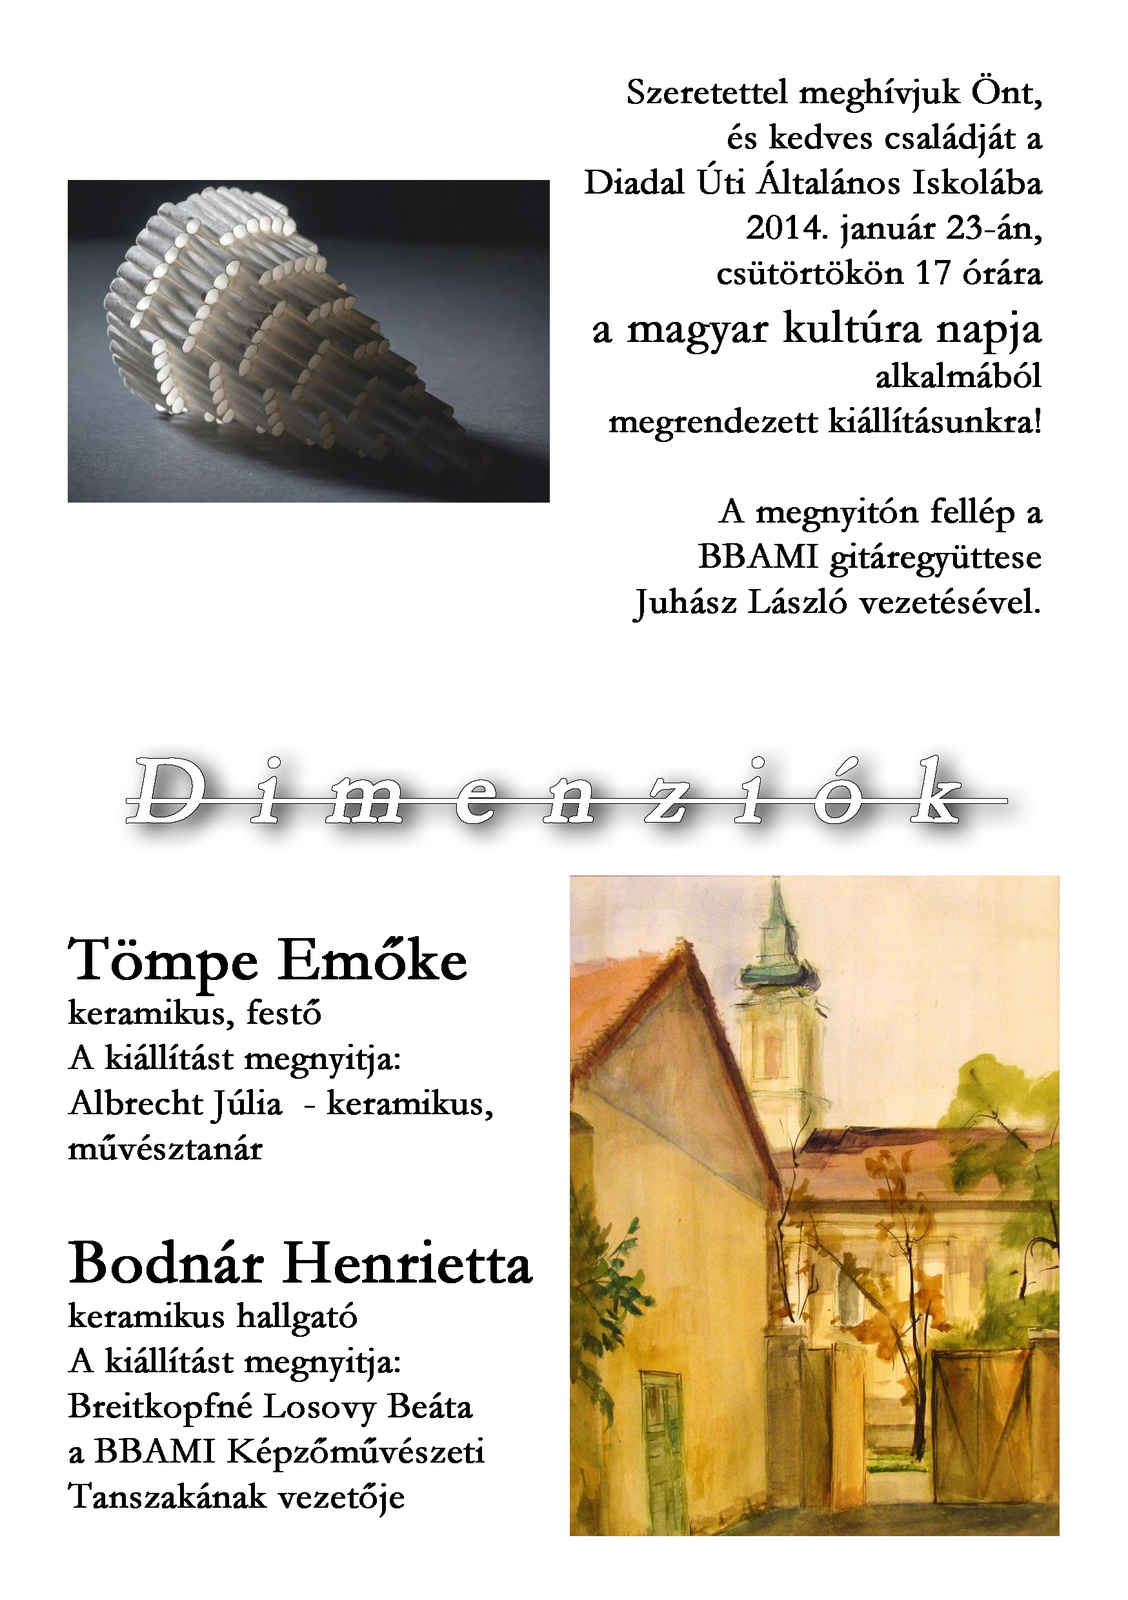 Meghívó magyar kultúra napjára 20140123